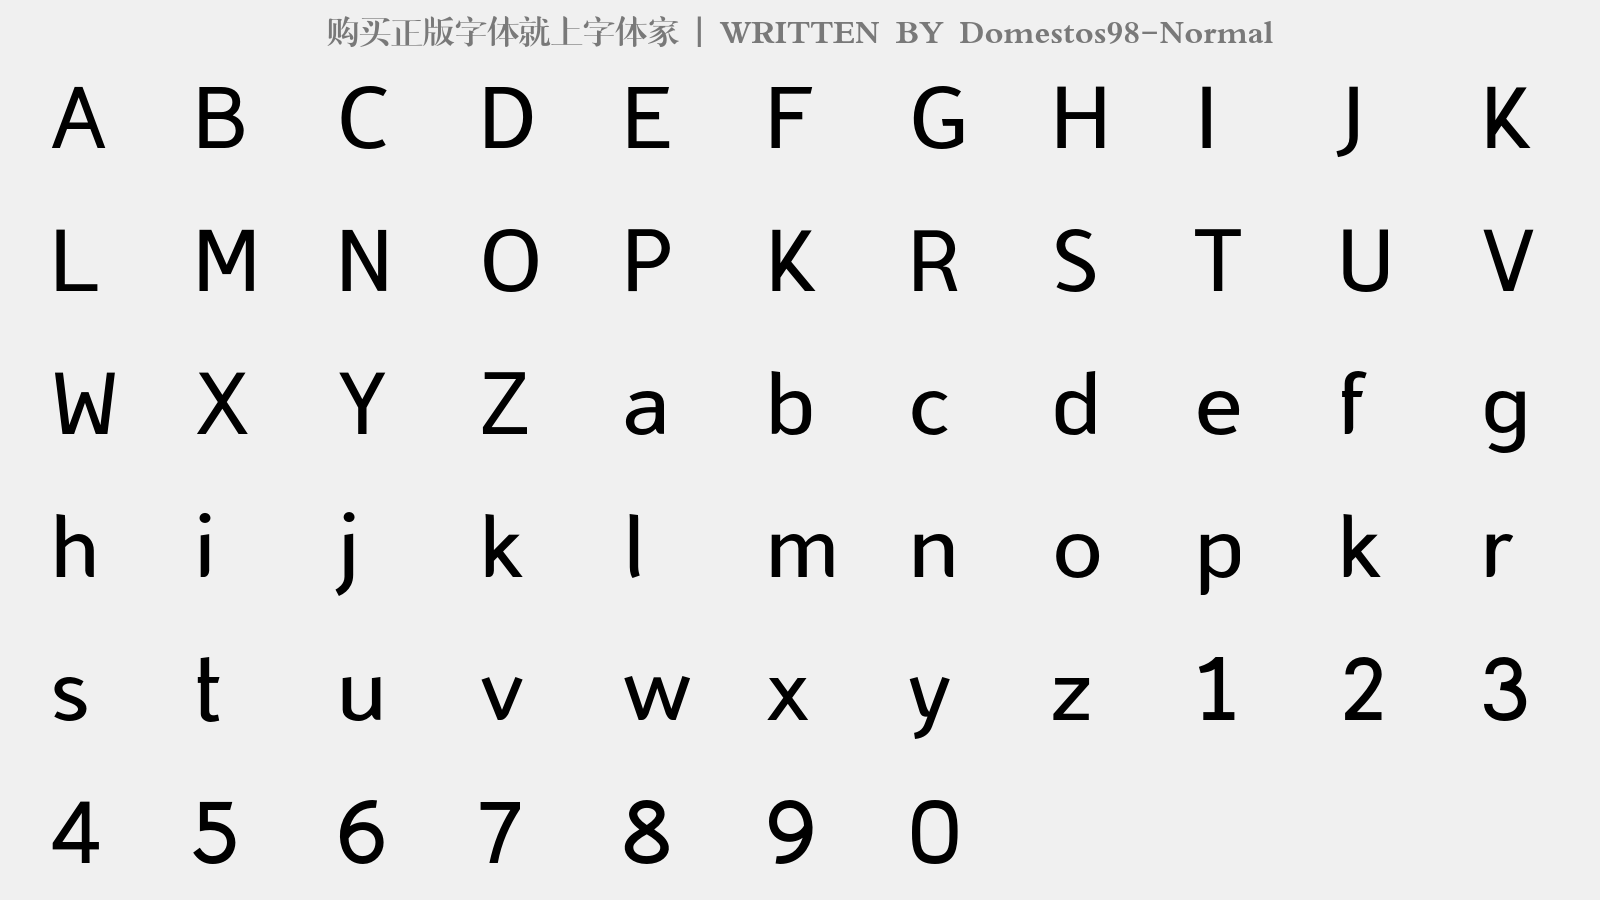 domestos98-normal - 大写字母/小写字母/数字